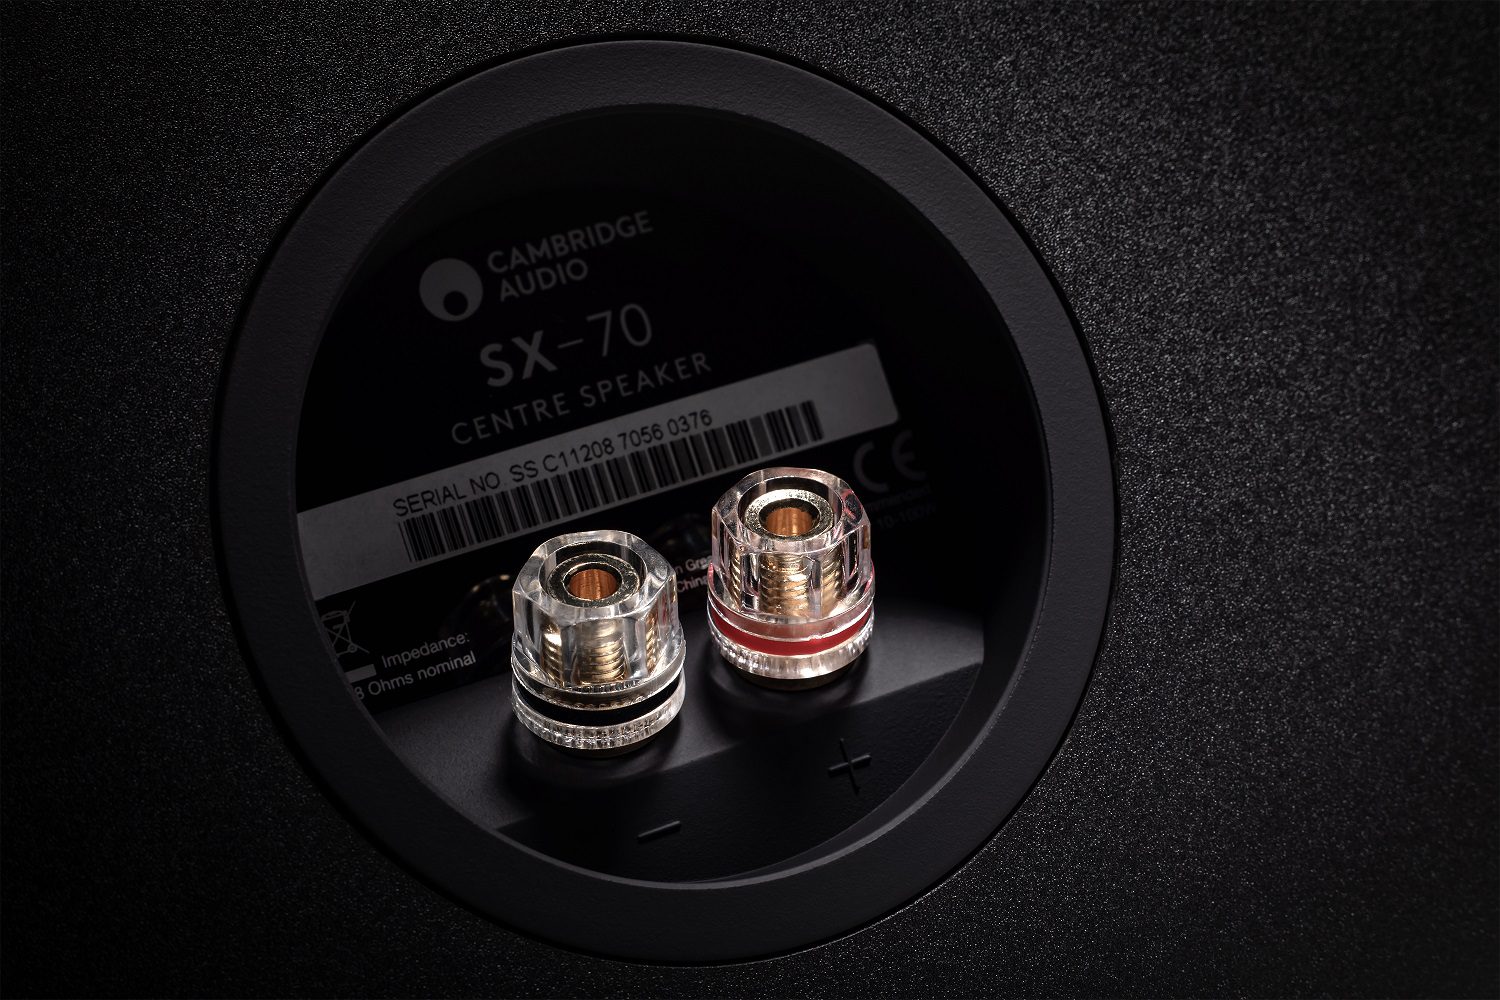 Cambridge Audio SX-70 zwart mat - Center speaker